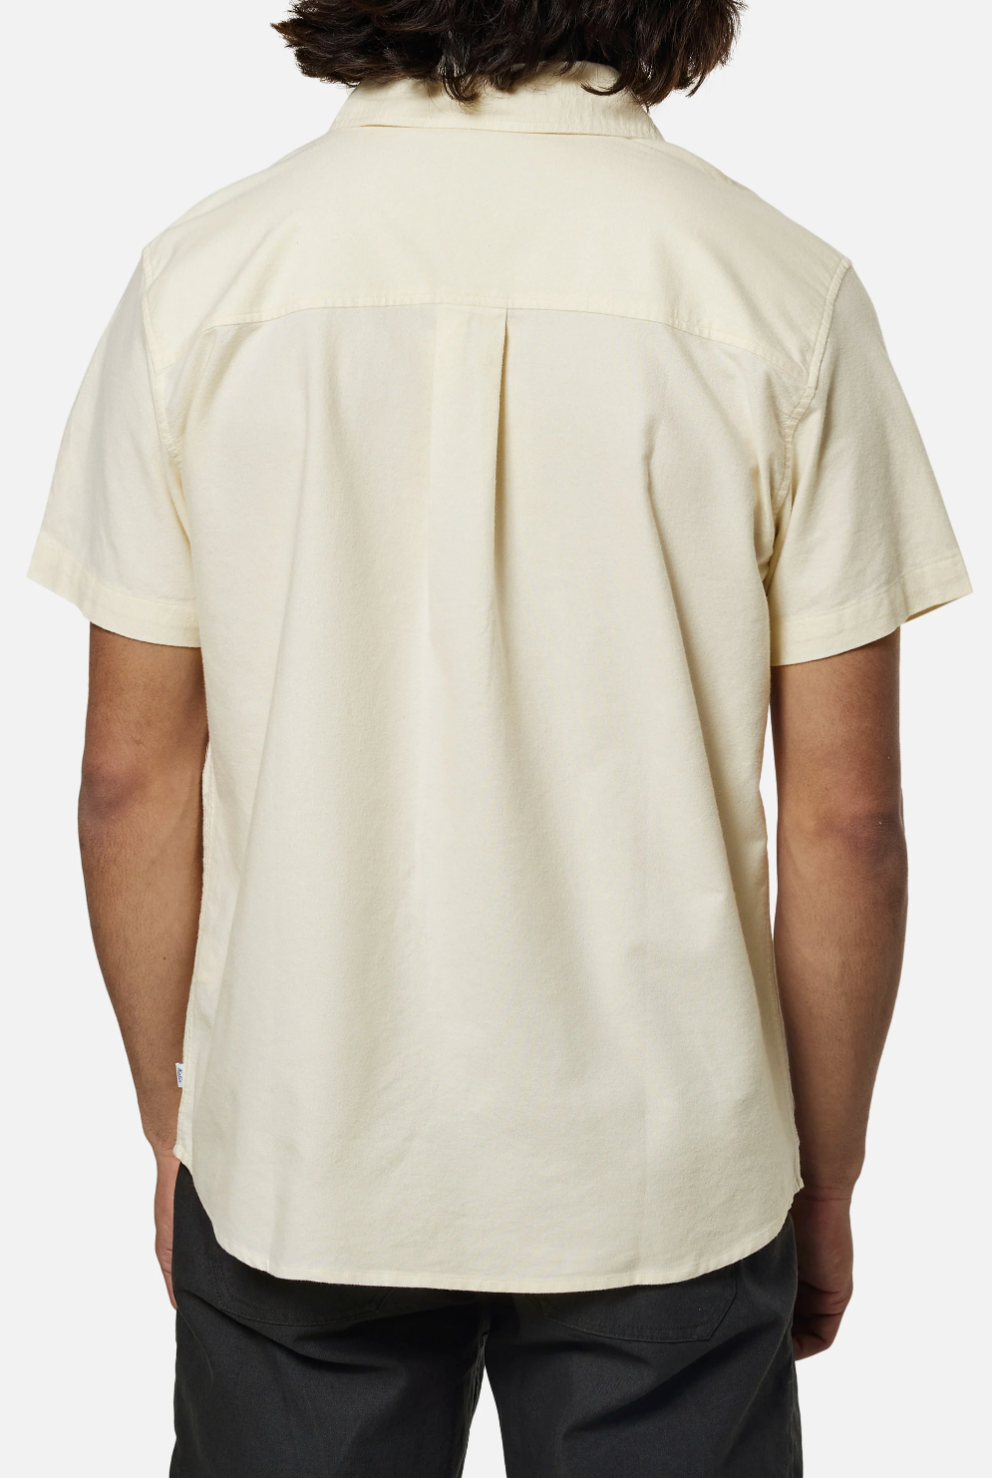 Colton Oxford Shirt - Vintage White